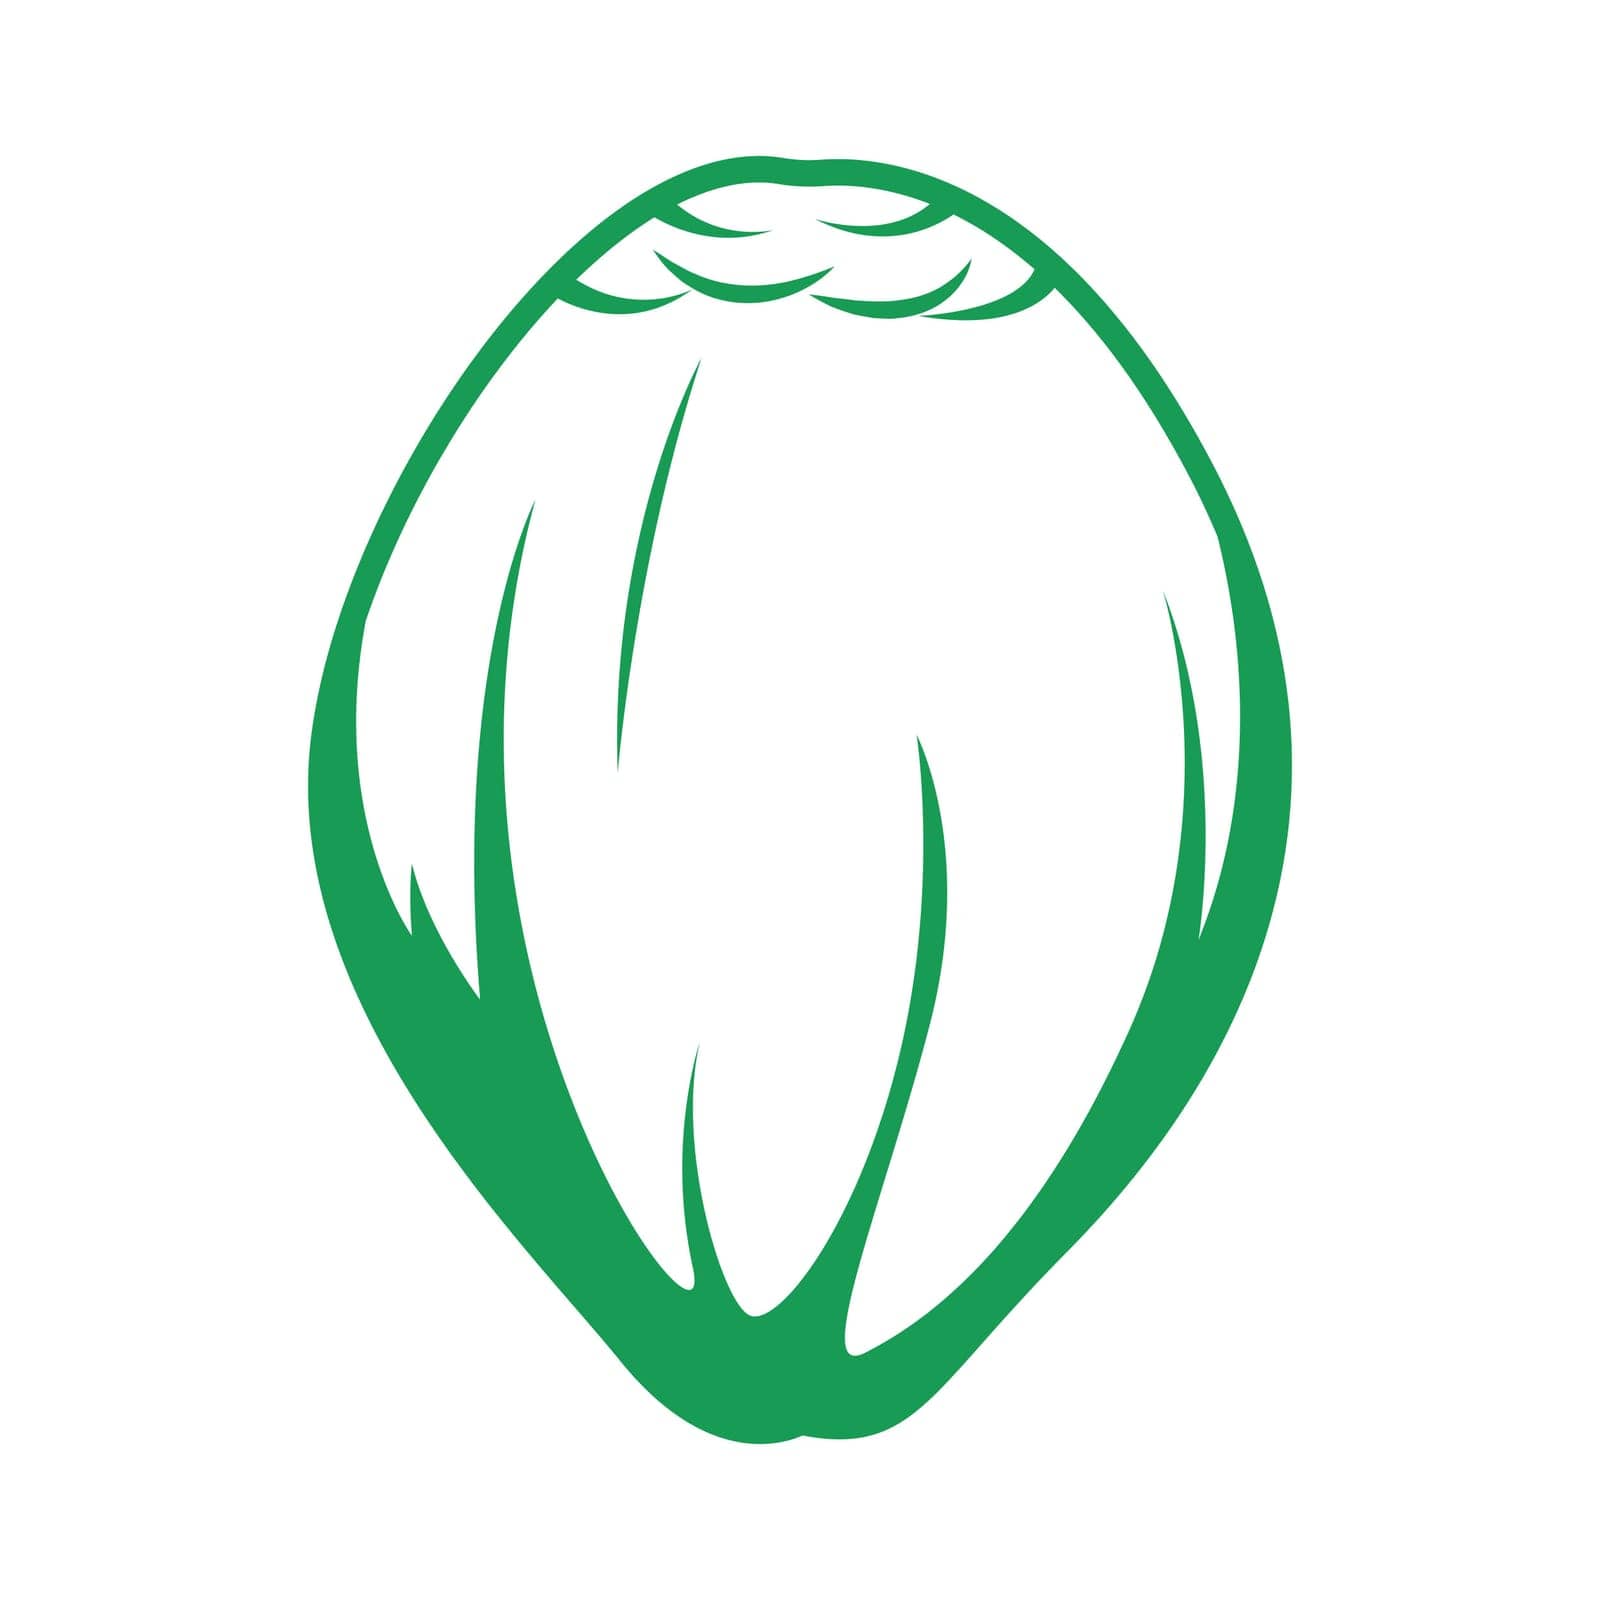 Coconut icon logo design illustration